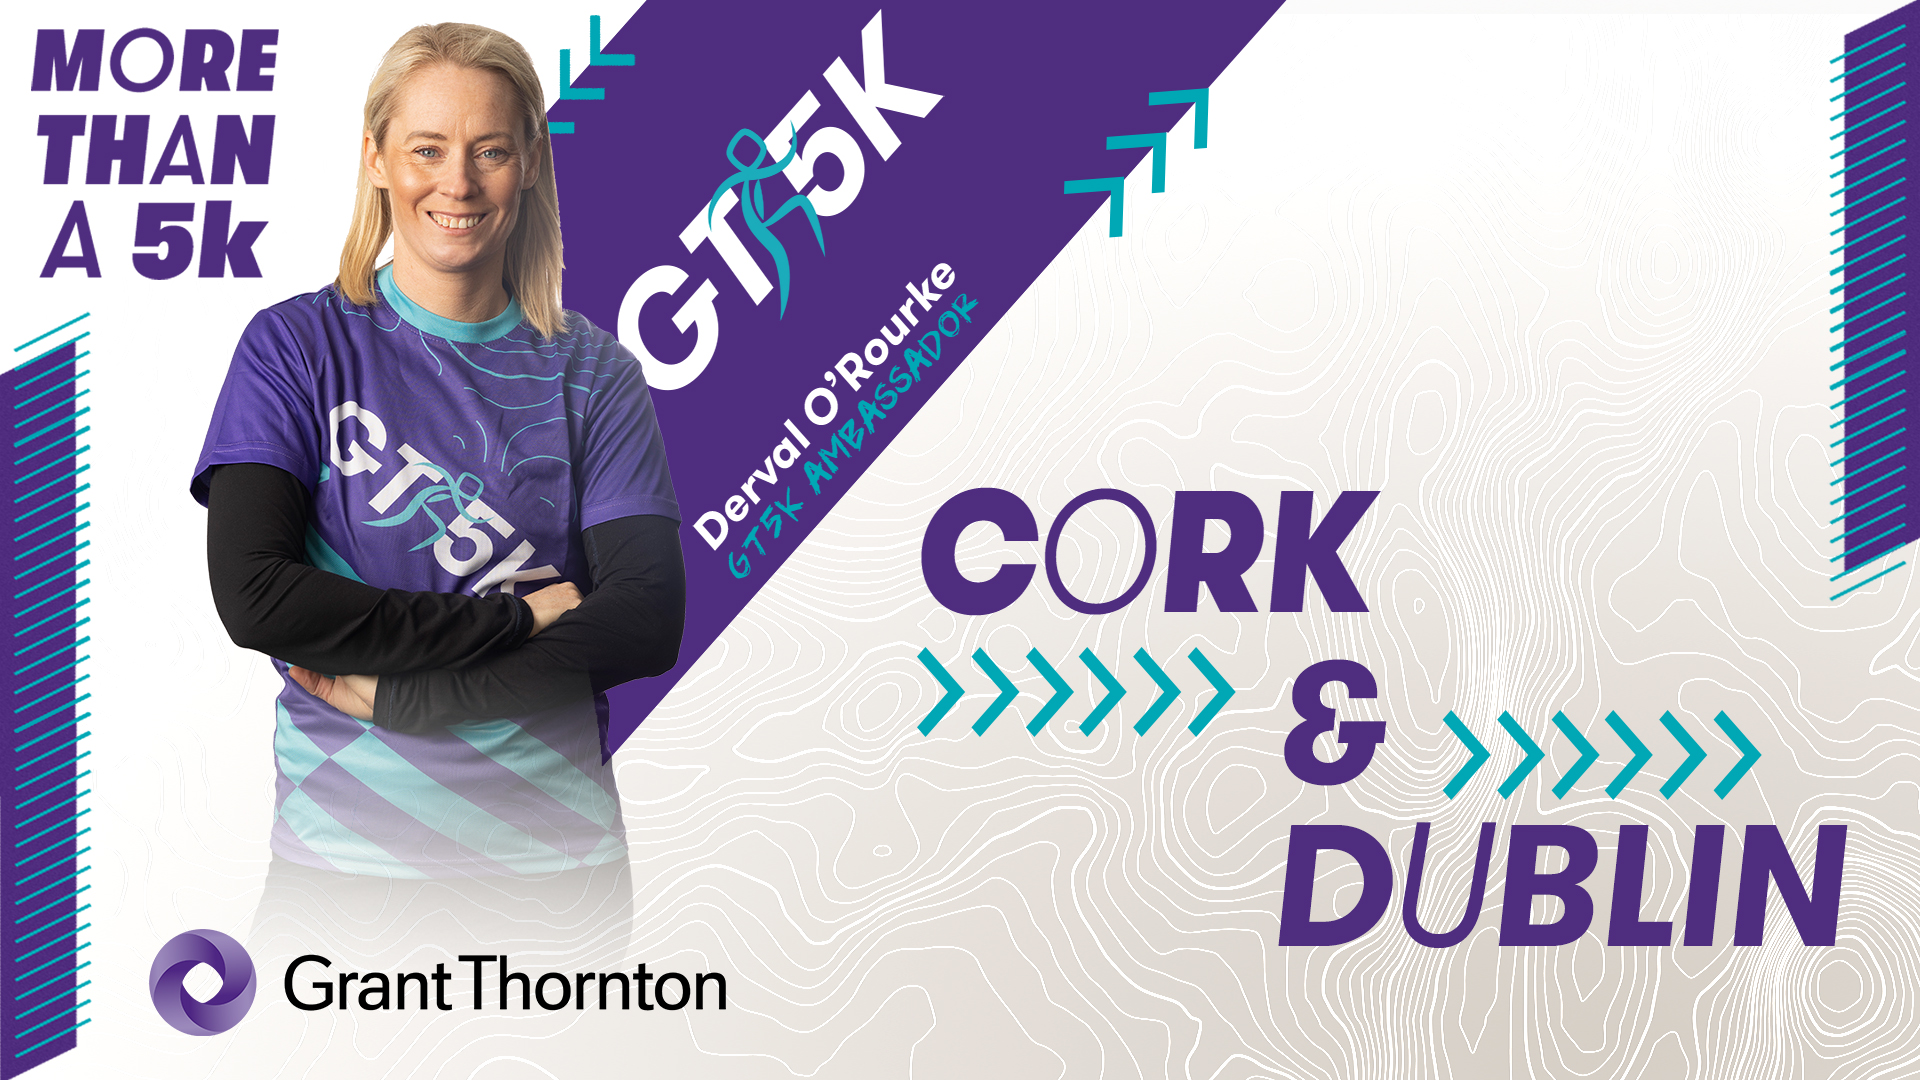 Grant Thornton’s GT5K Series returns to Dublin, Tuesday Sept 26th